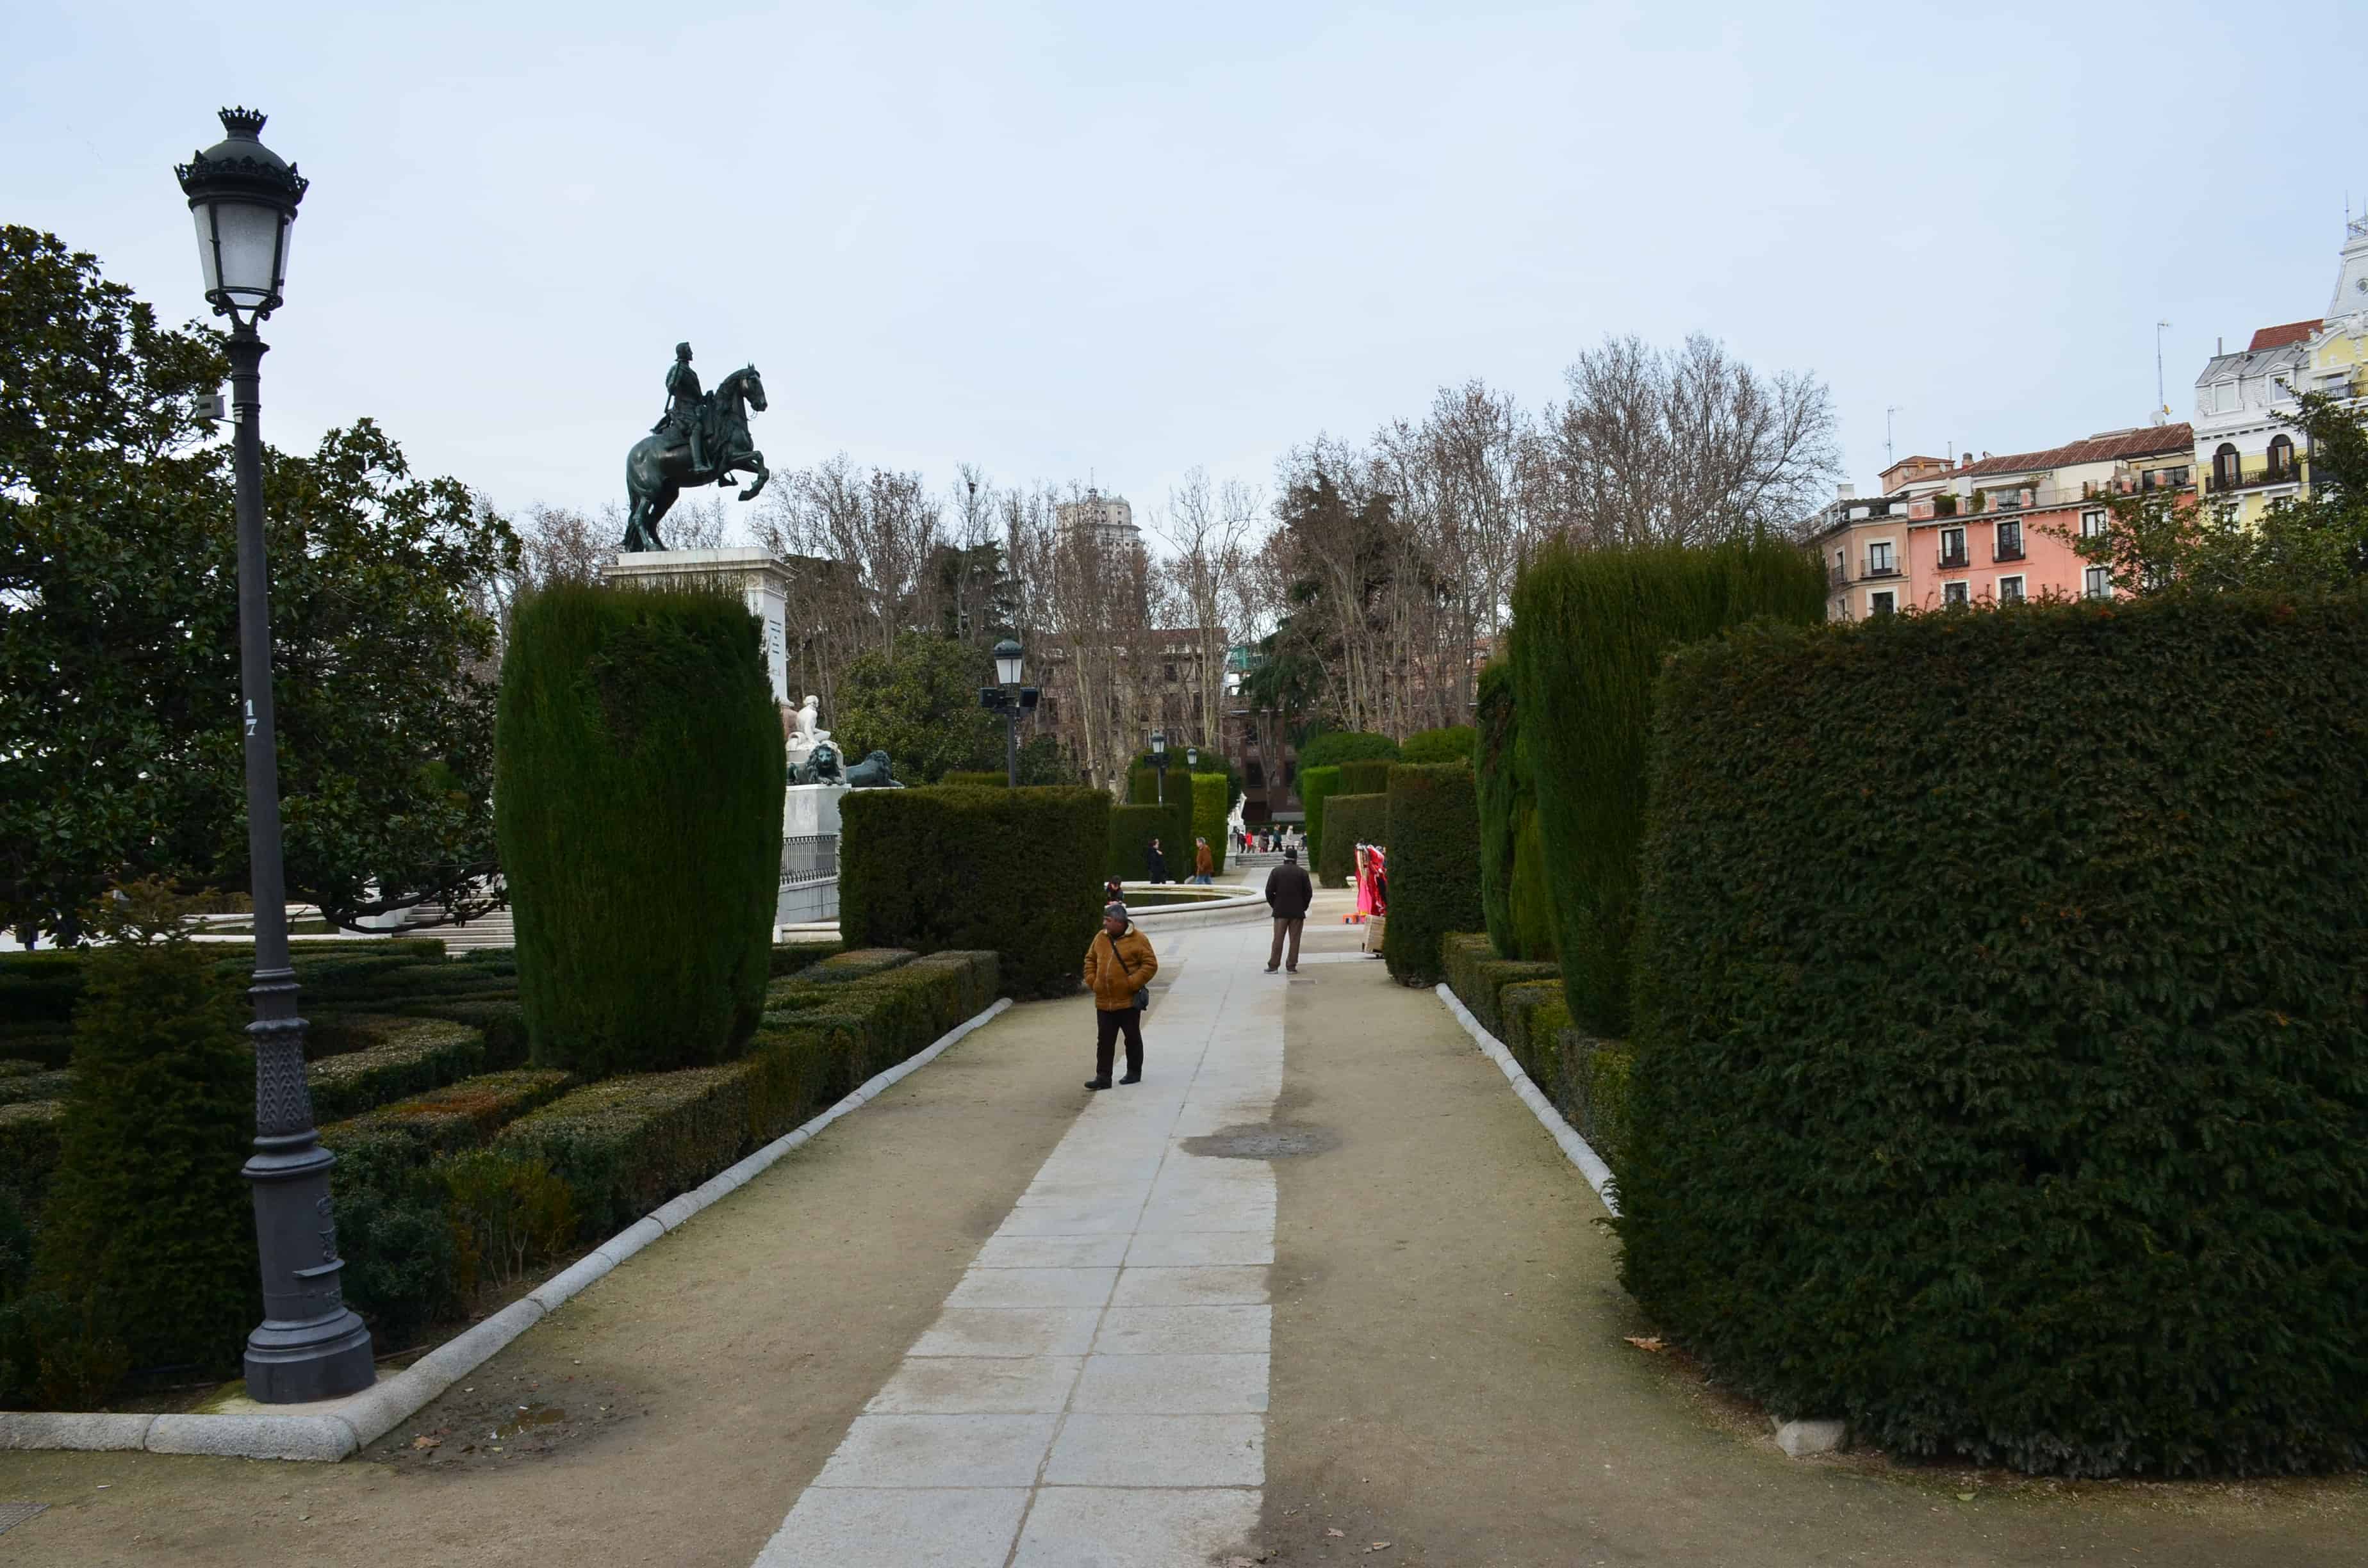 Central Gardens at Plaza de Oriente in Madrid, Spain